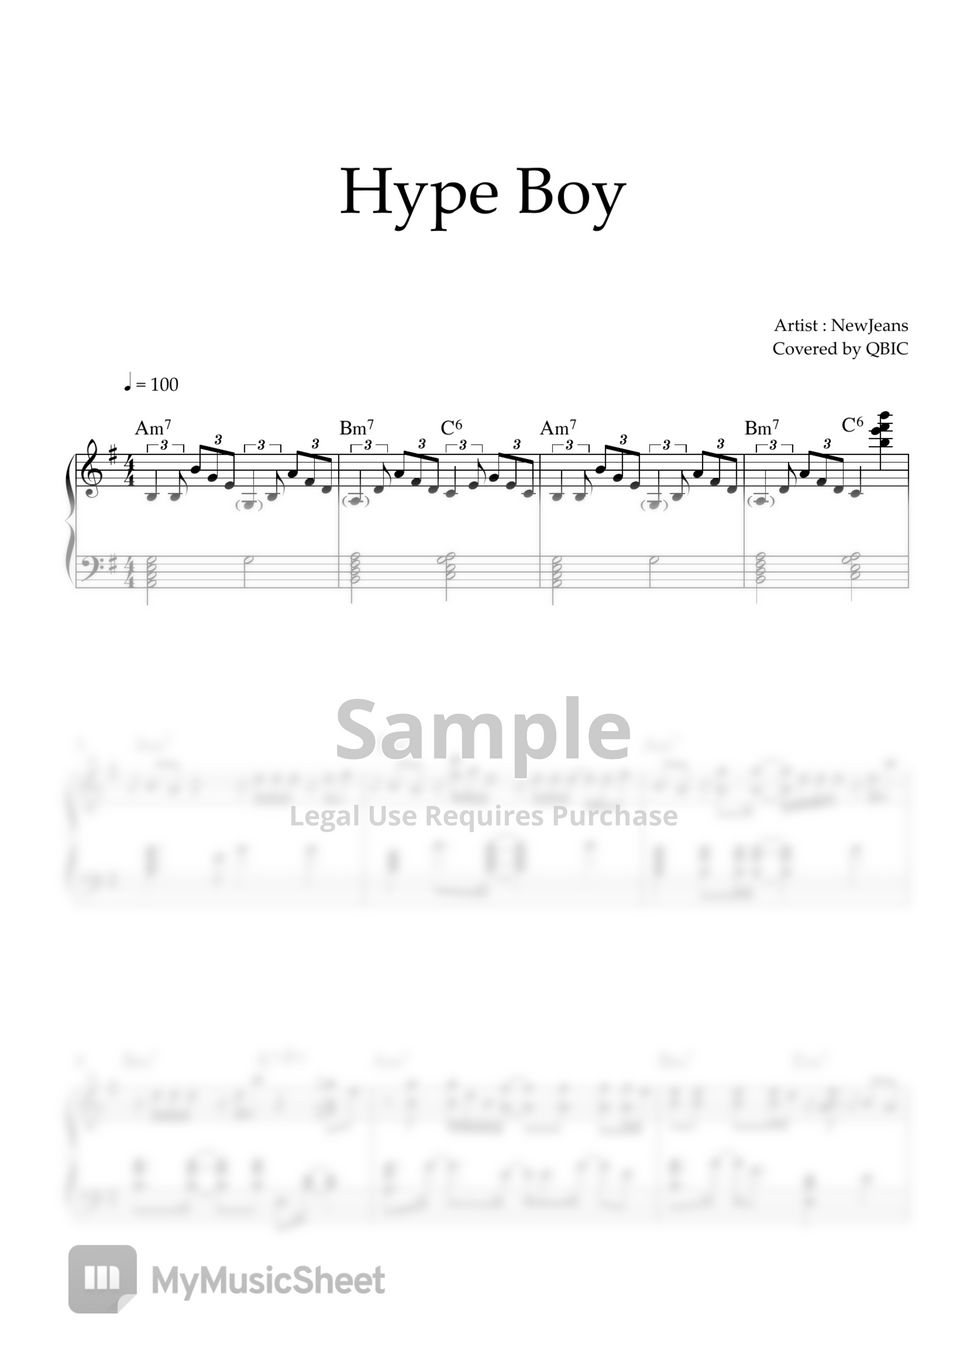 Hype Boy - newjeans by QBIC